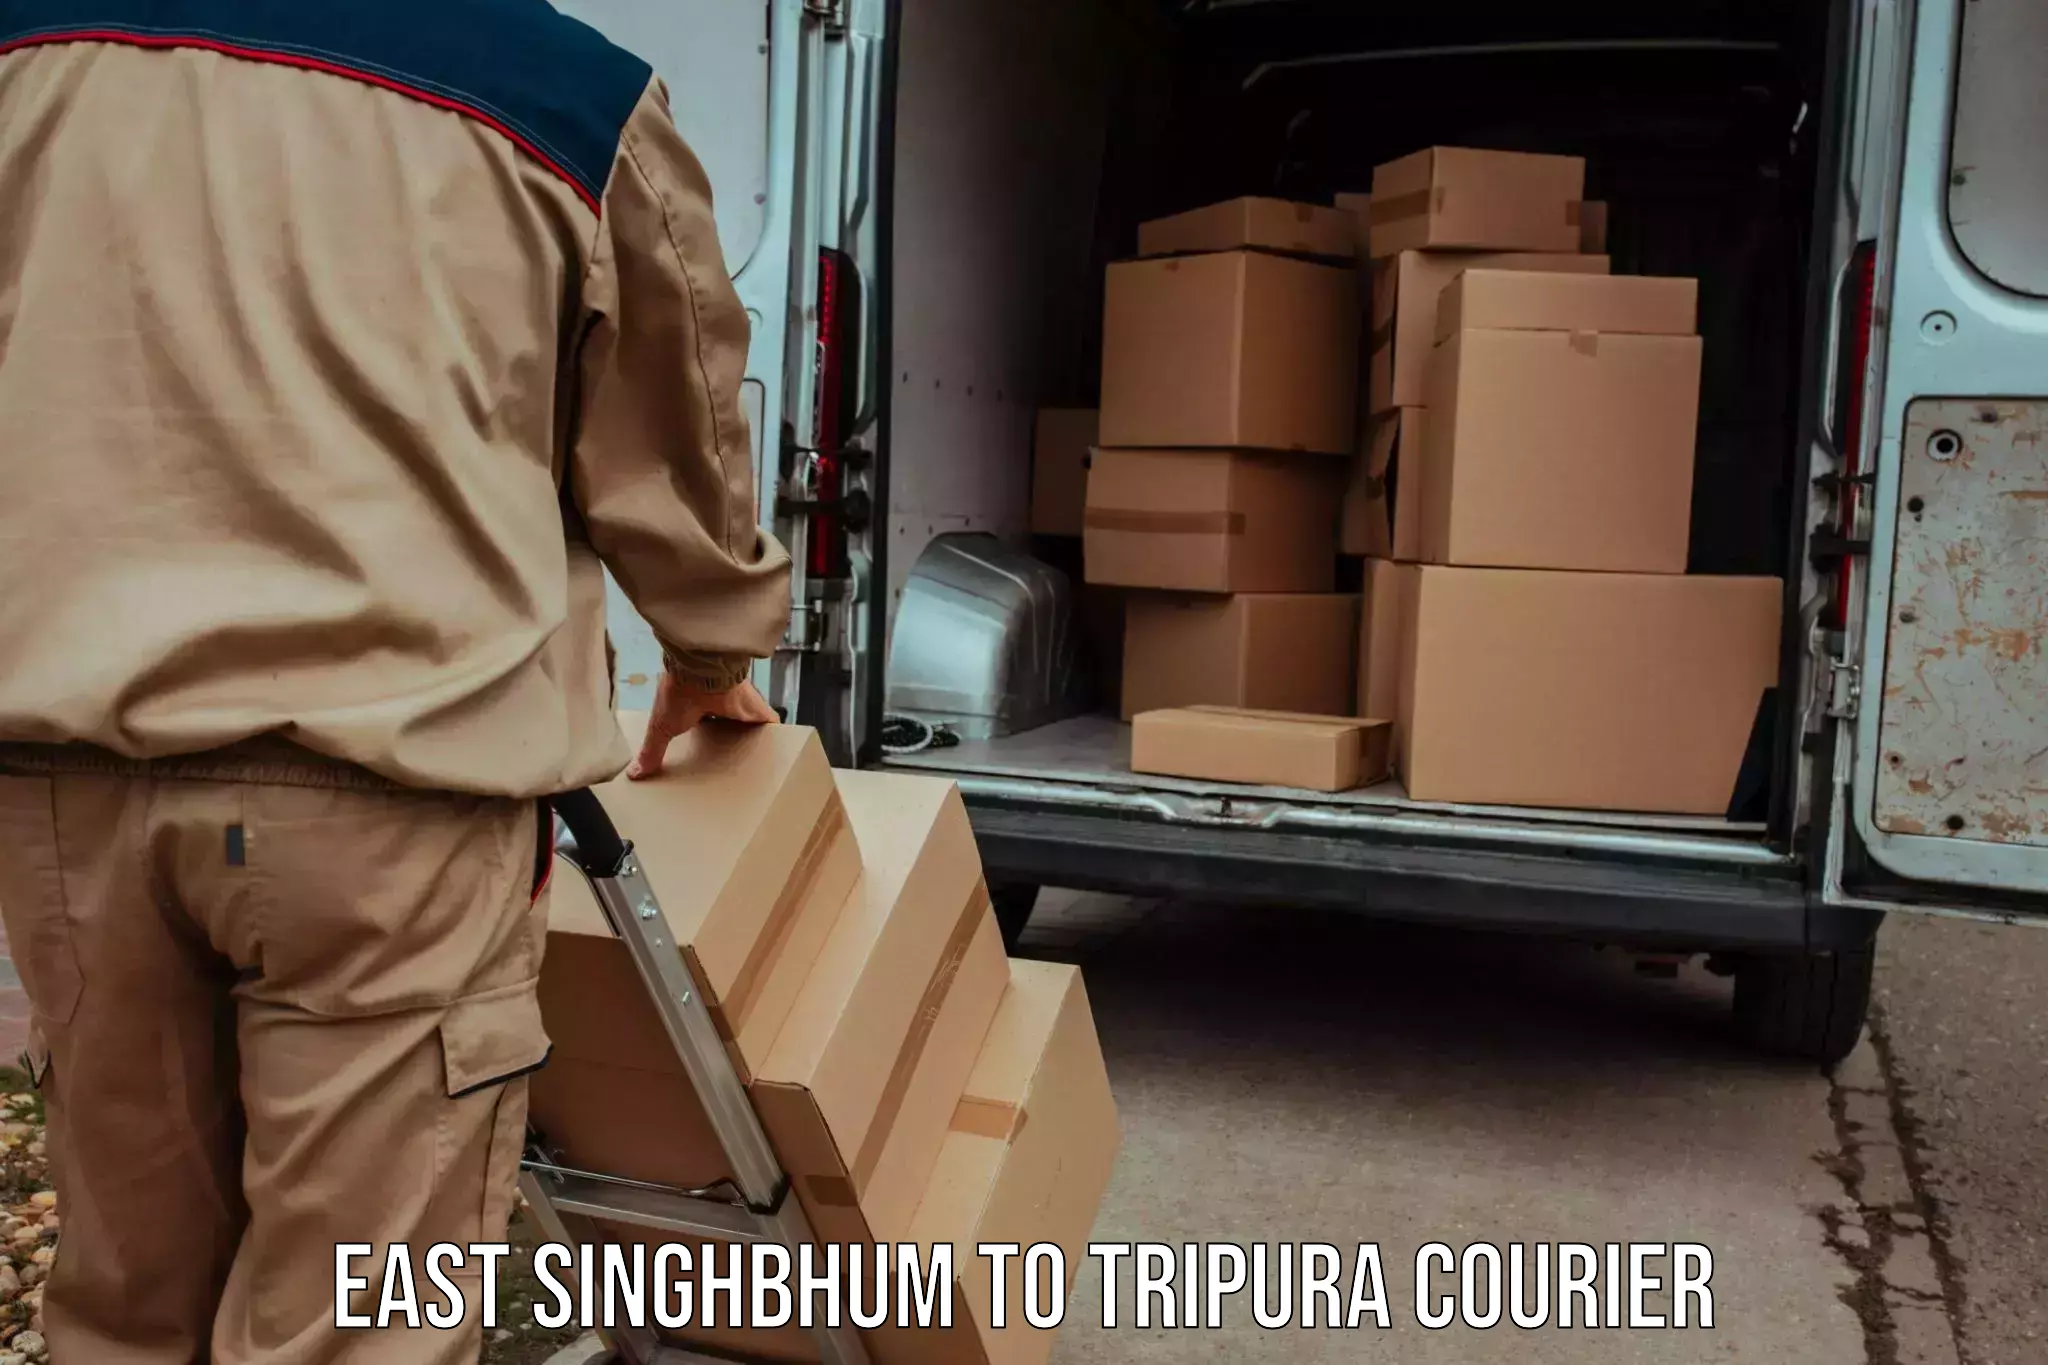 On-demand courier East Singhbhum to Udaipur Tripura